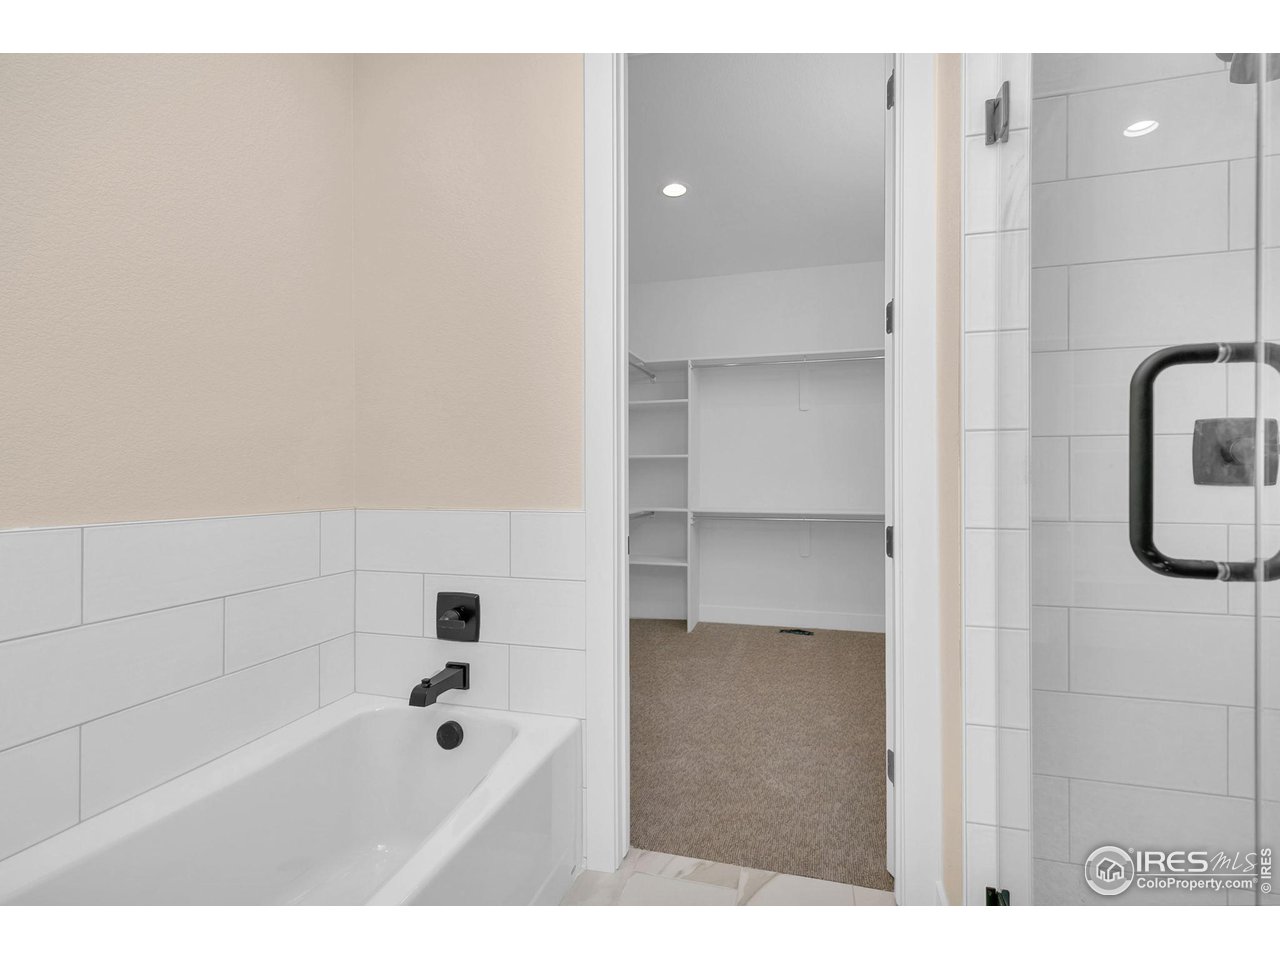 Full-height designer tile in showers and baths